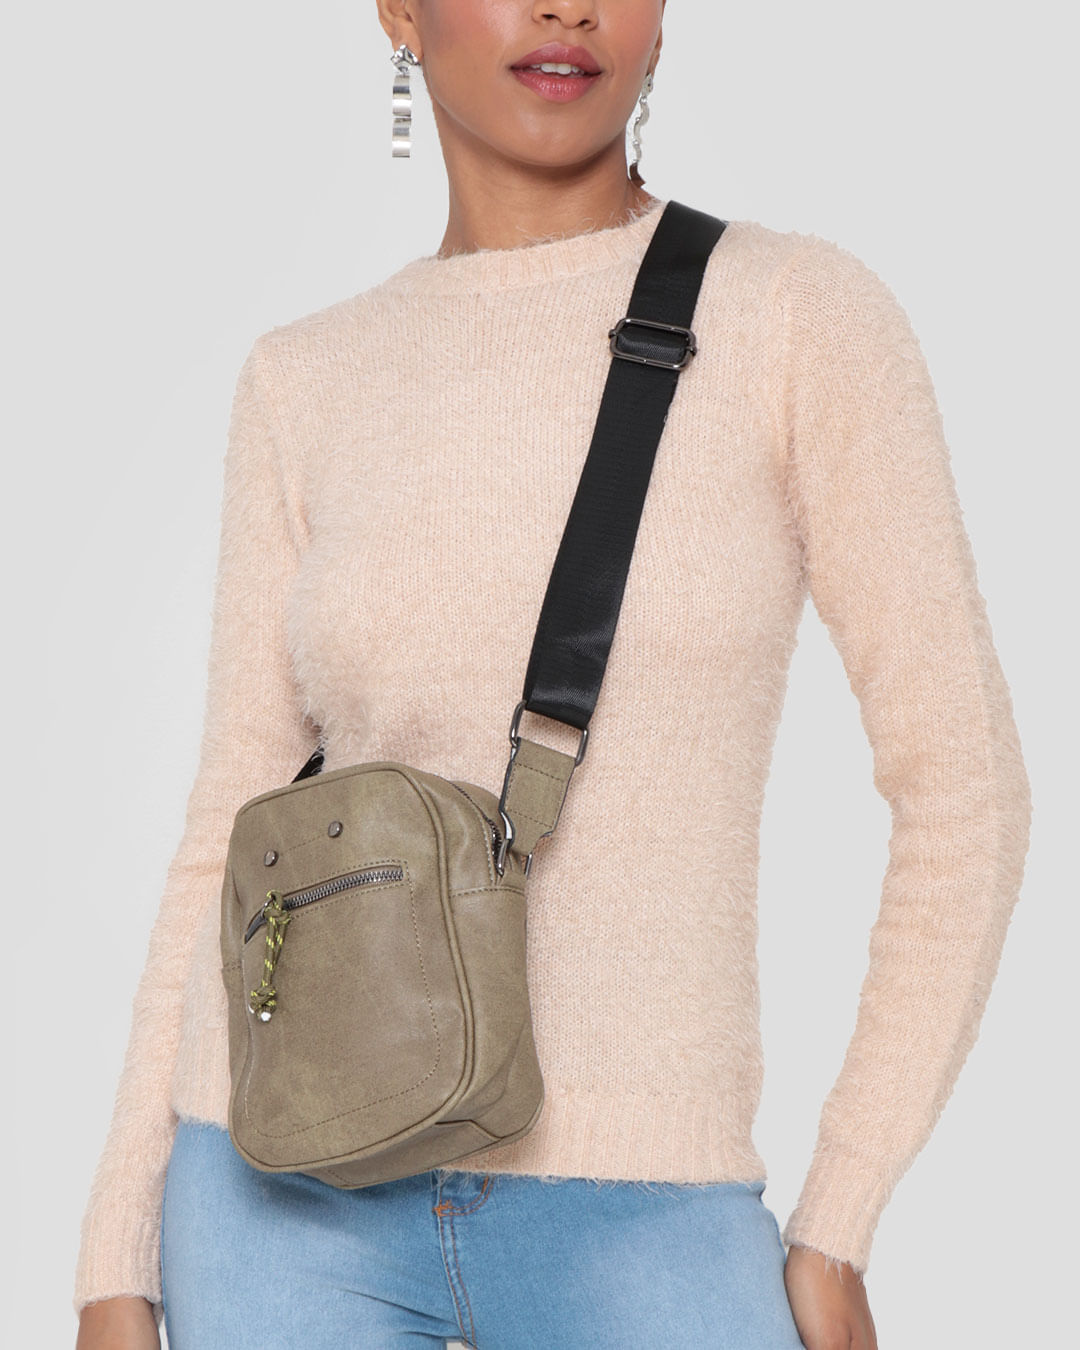 Bolsa Feminina Shoulder Bag Comfort Verde